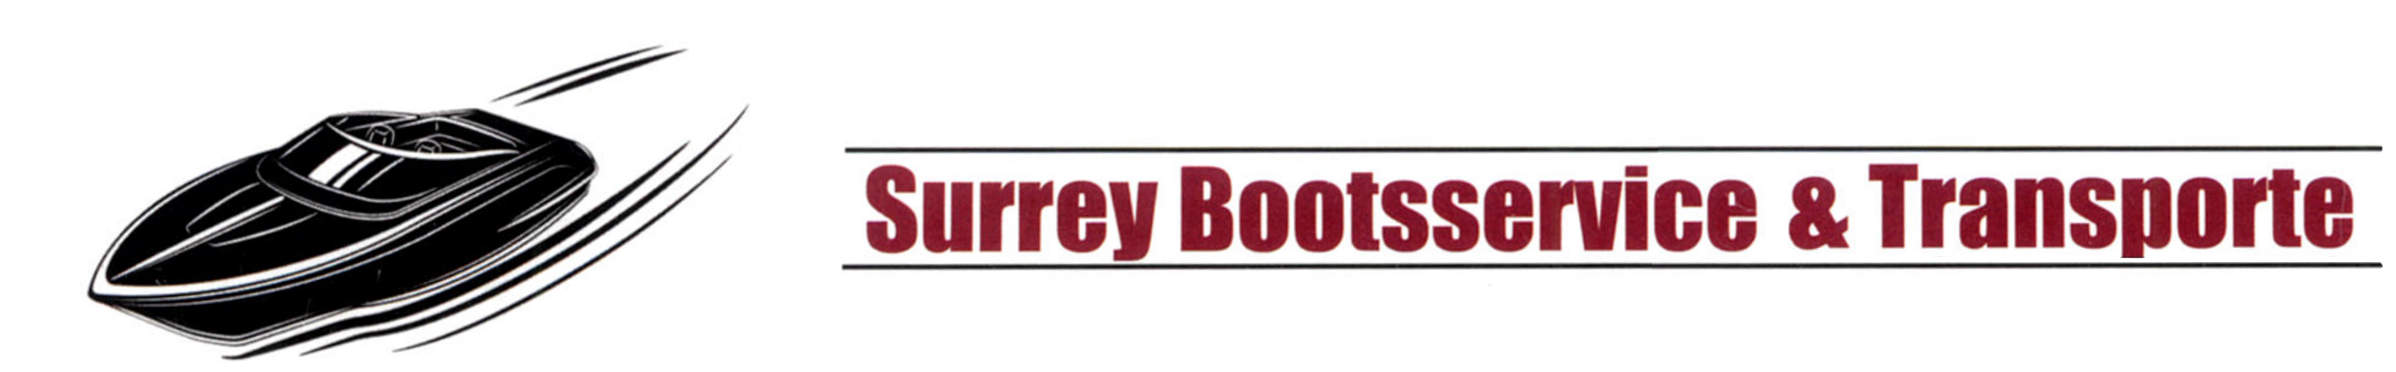 Surrey Bootsservice & Transporte